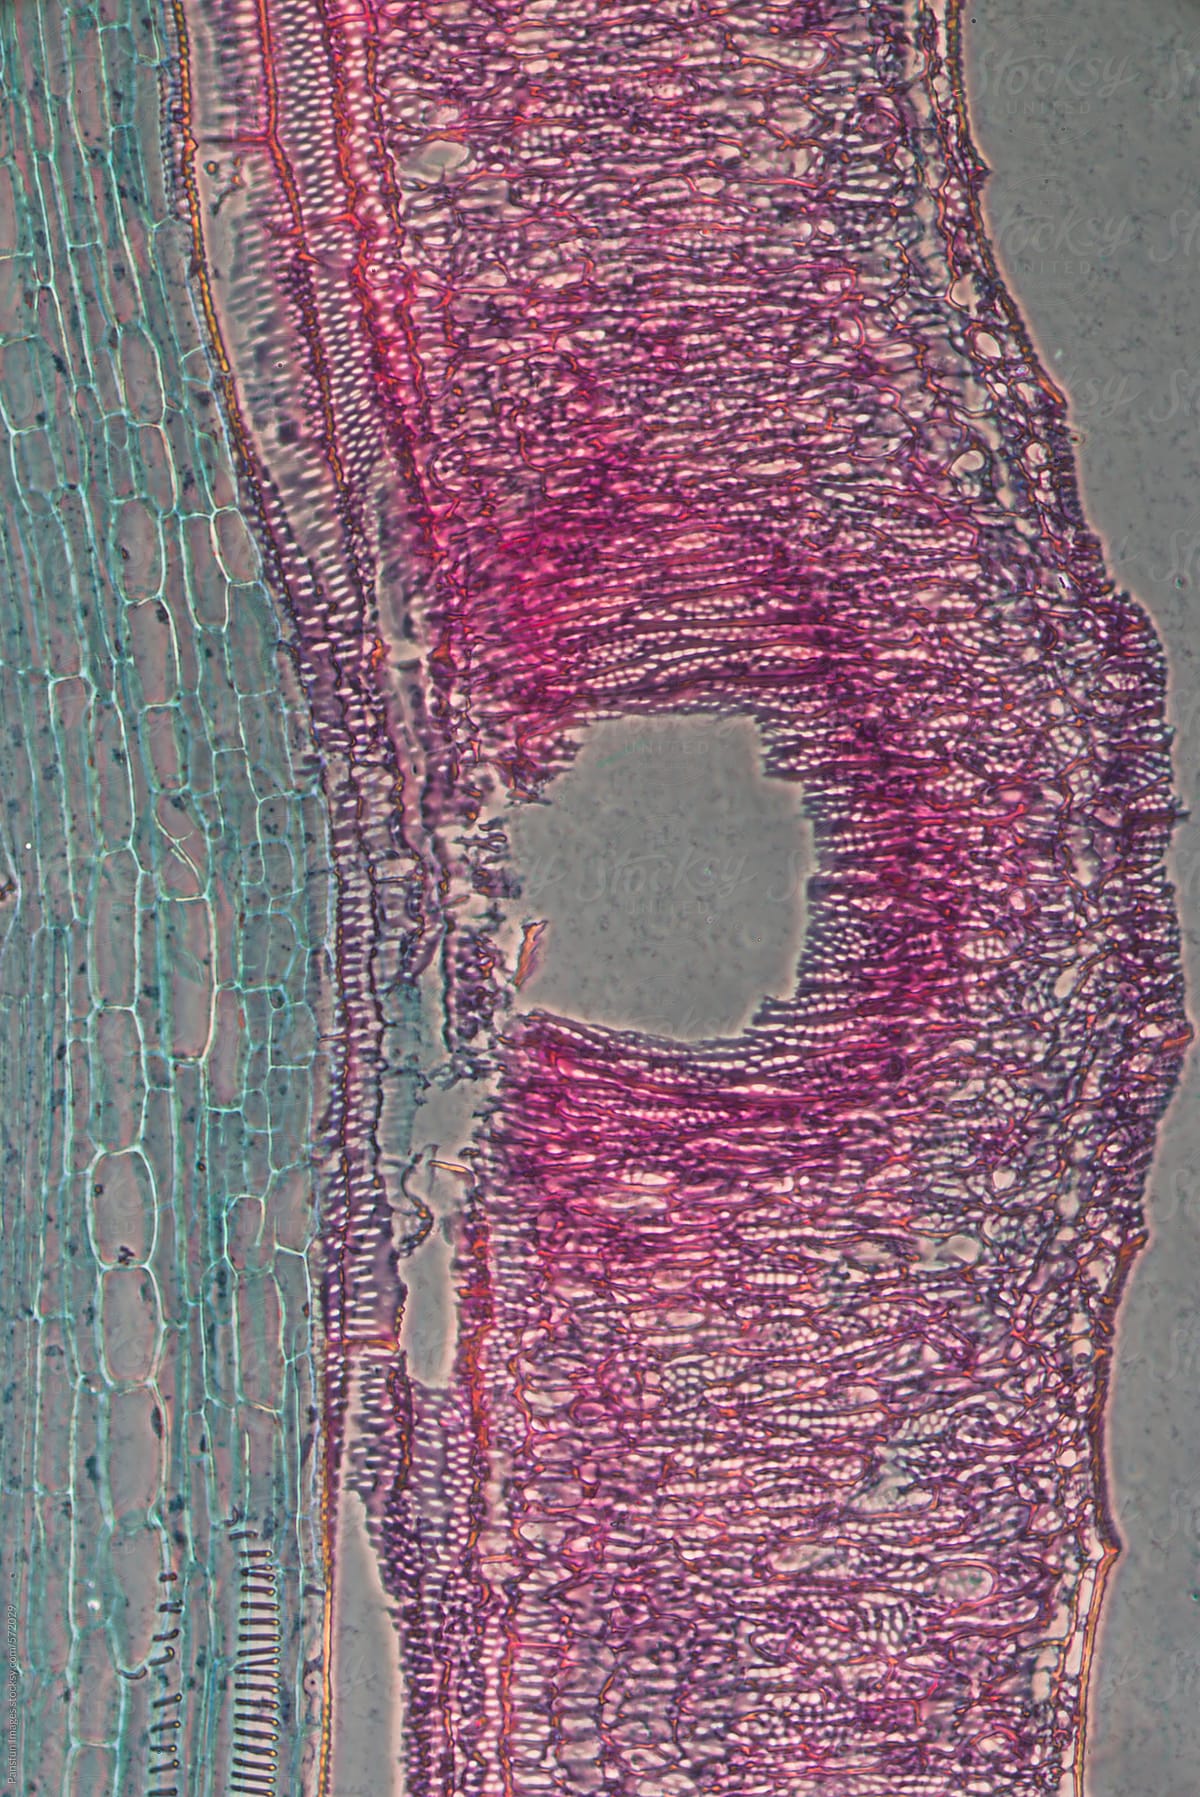 micrograph cells of Cucurbita pepo stem